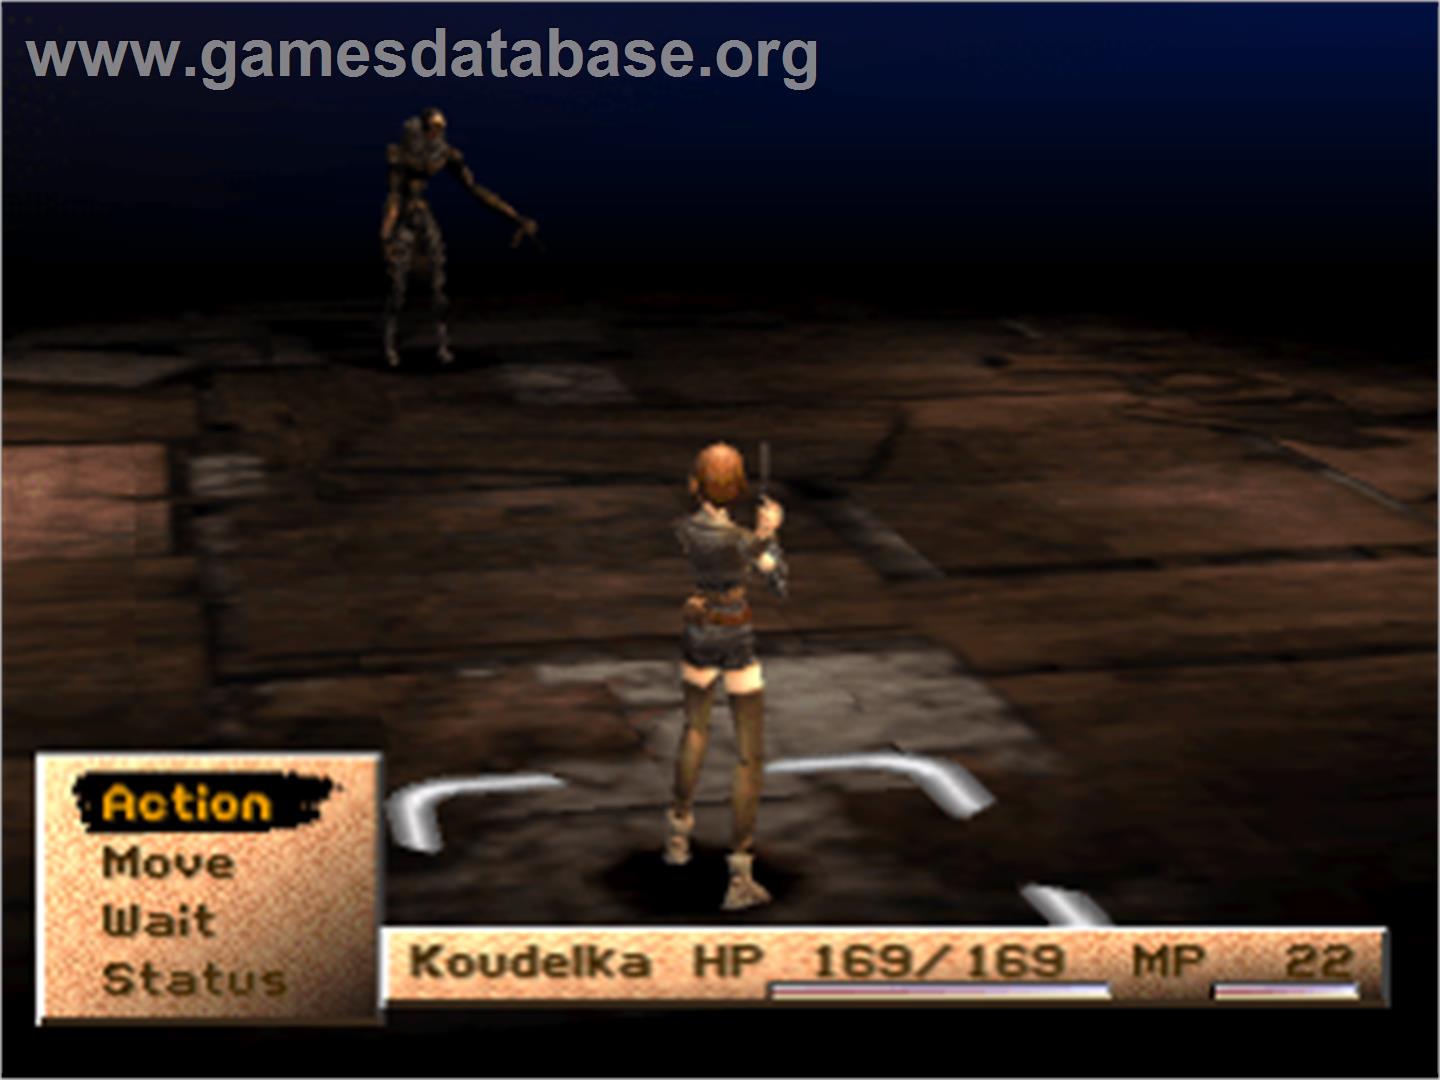 Koudelka - Sony Playstation - Artwork - In Game